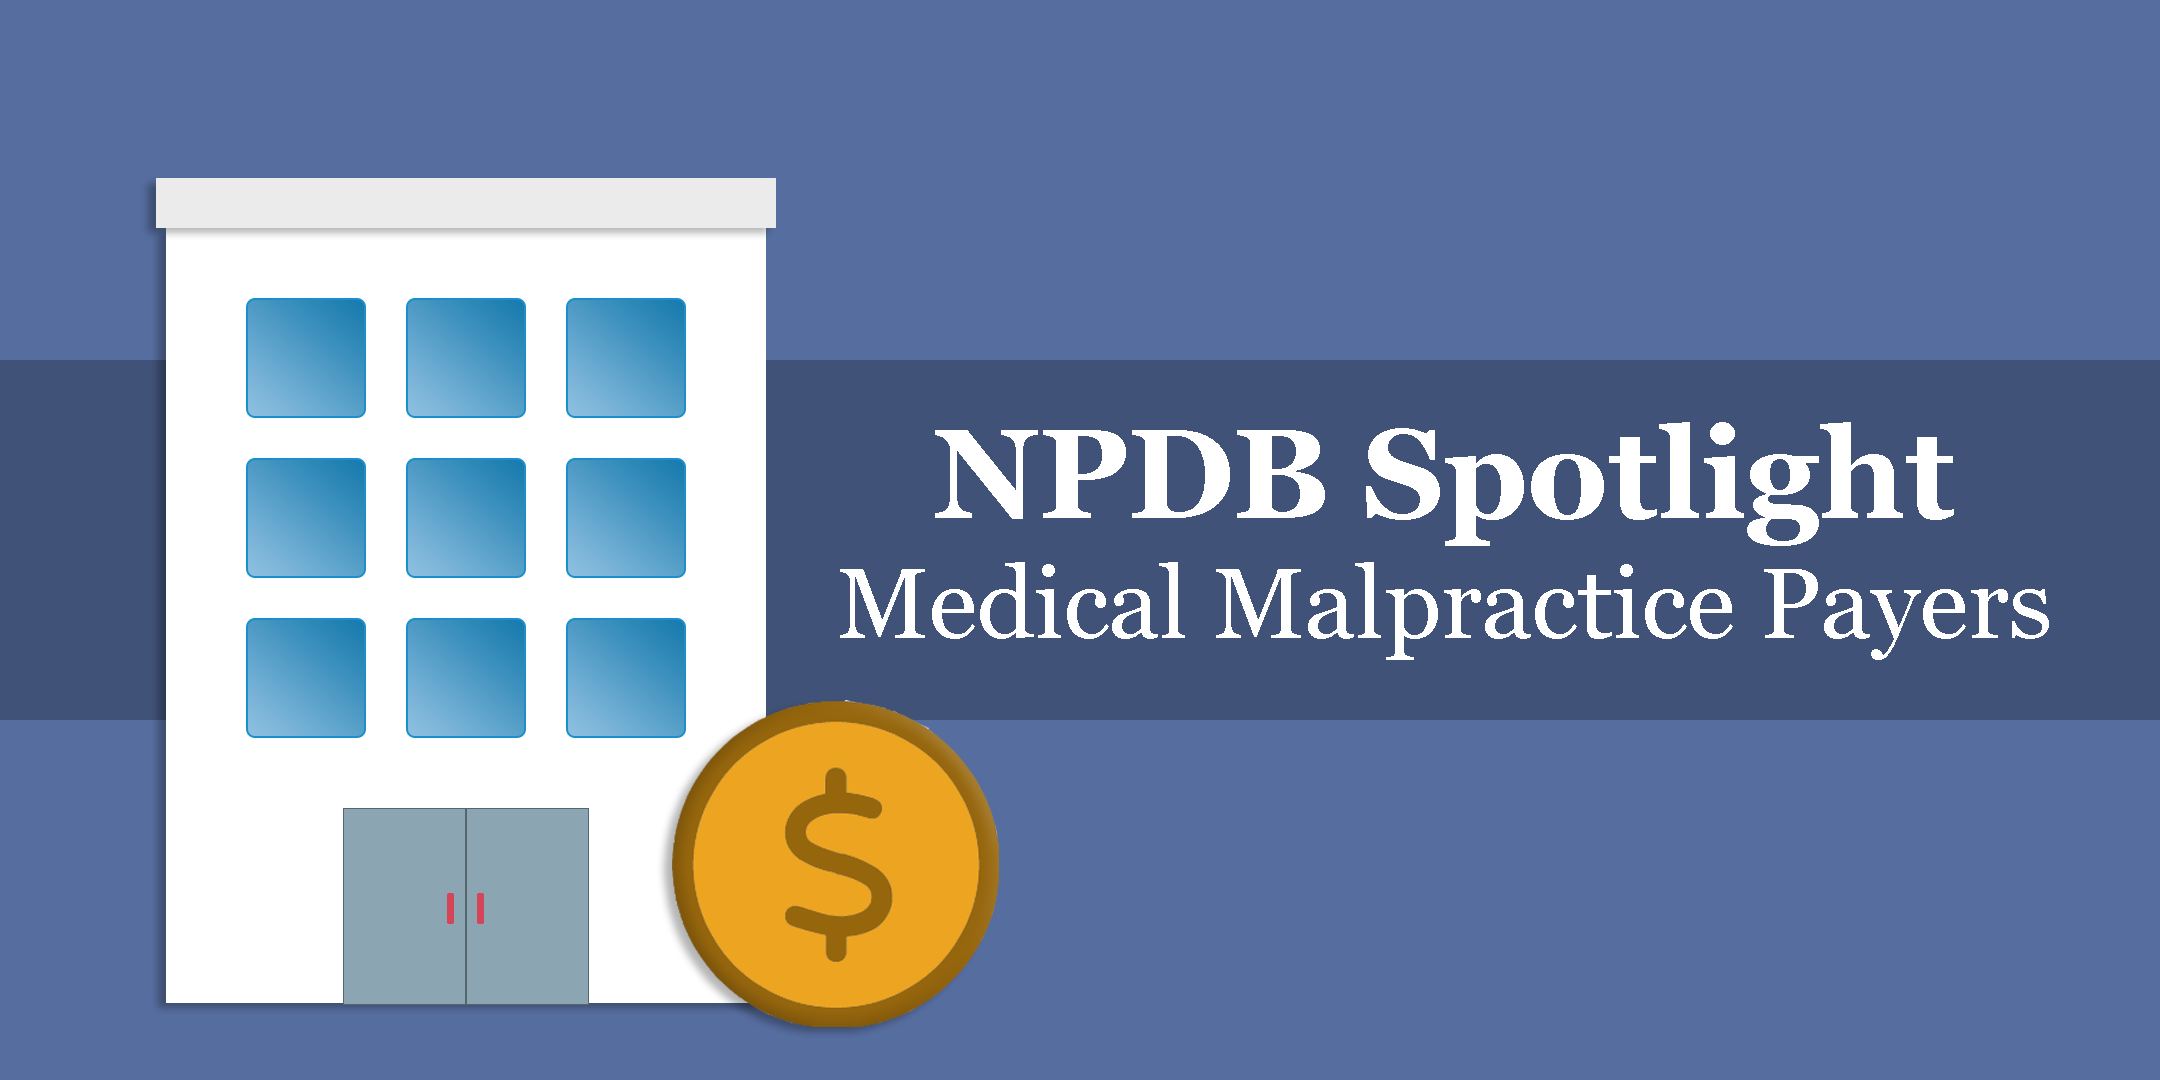 NPDB Spotlight: Medical Malpractice Payers